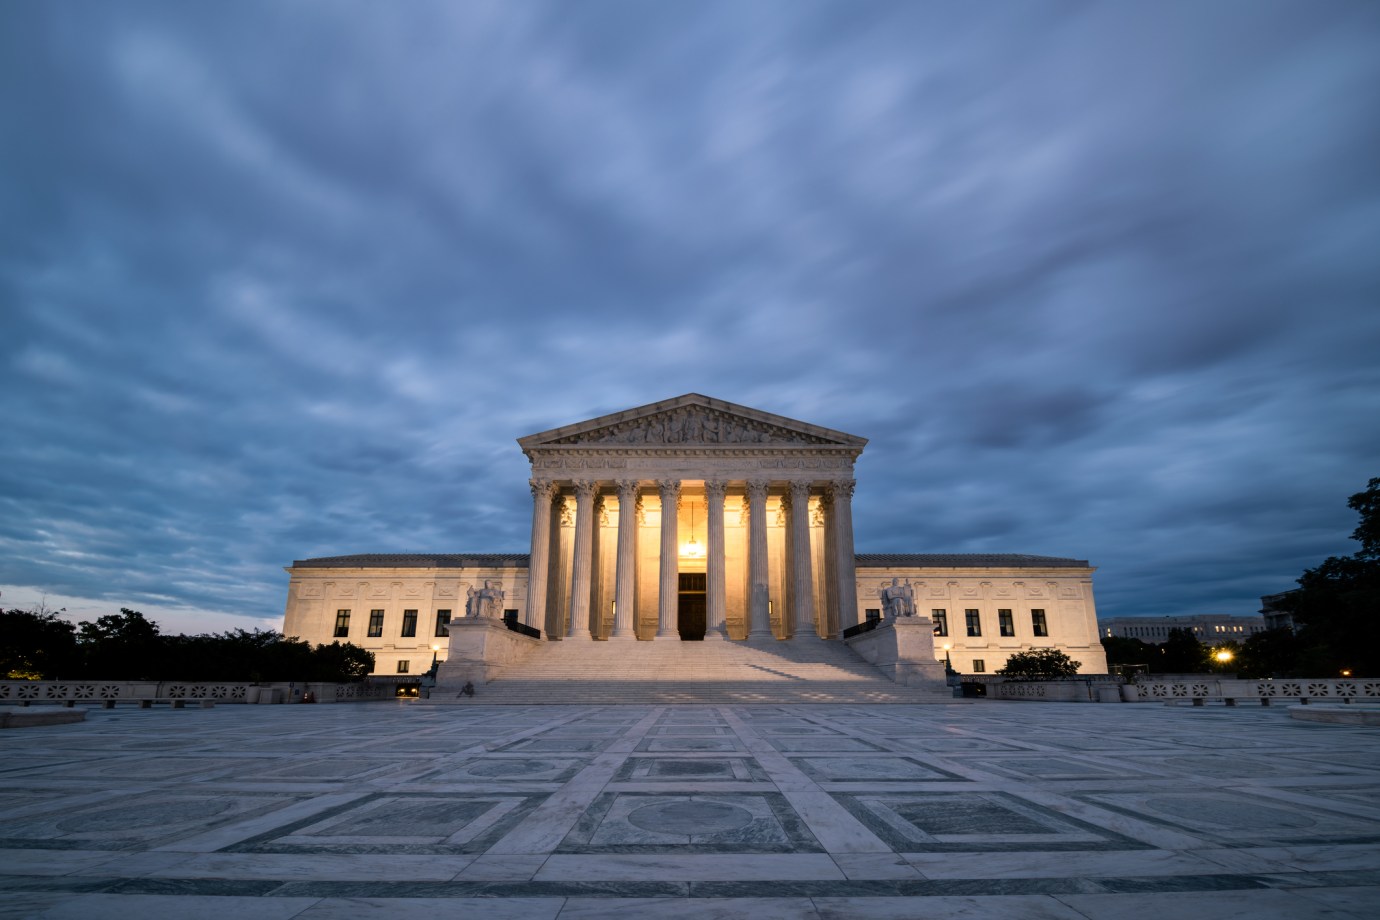 The U.S. Supreme Court building in Washington, D.C. (Photo via Geoff Livingston/Getty Images.)